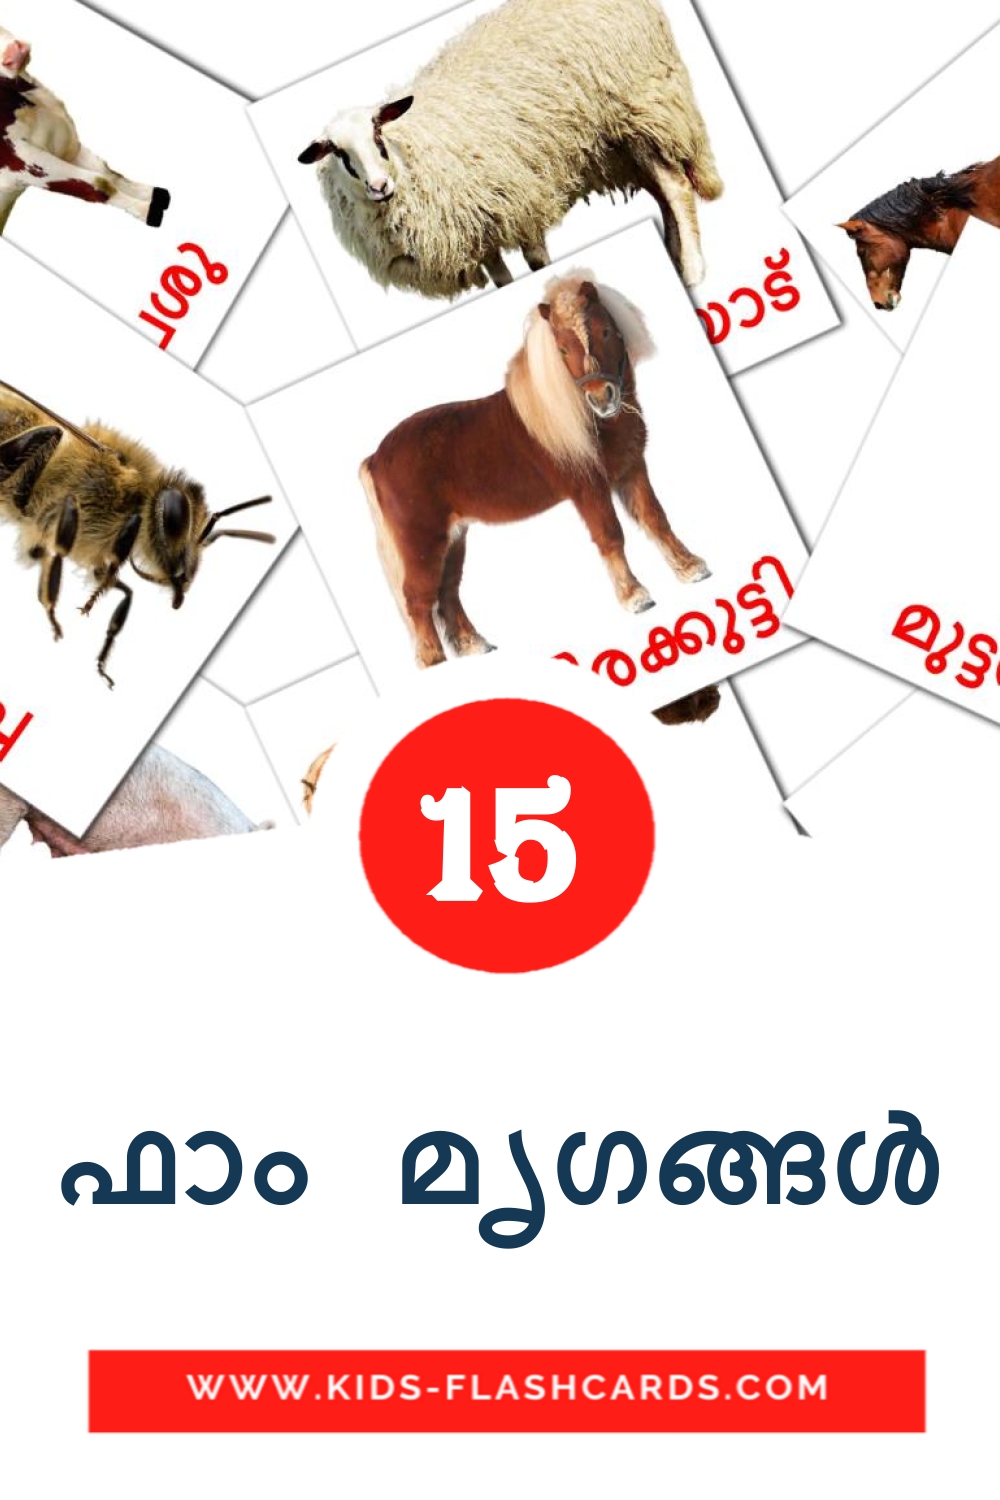 15 ഫാം മൃഗങ്ങൾ fotokaarten voor kleuters in het malayalam